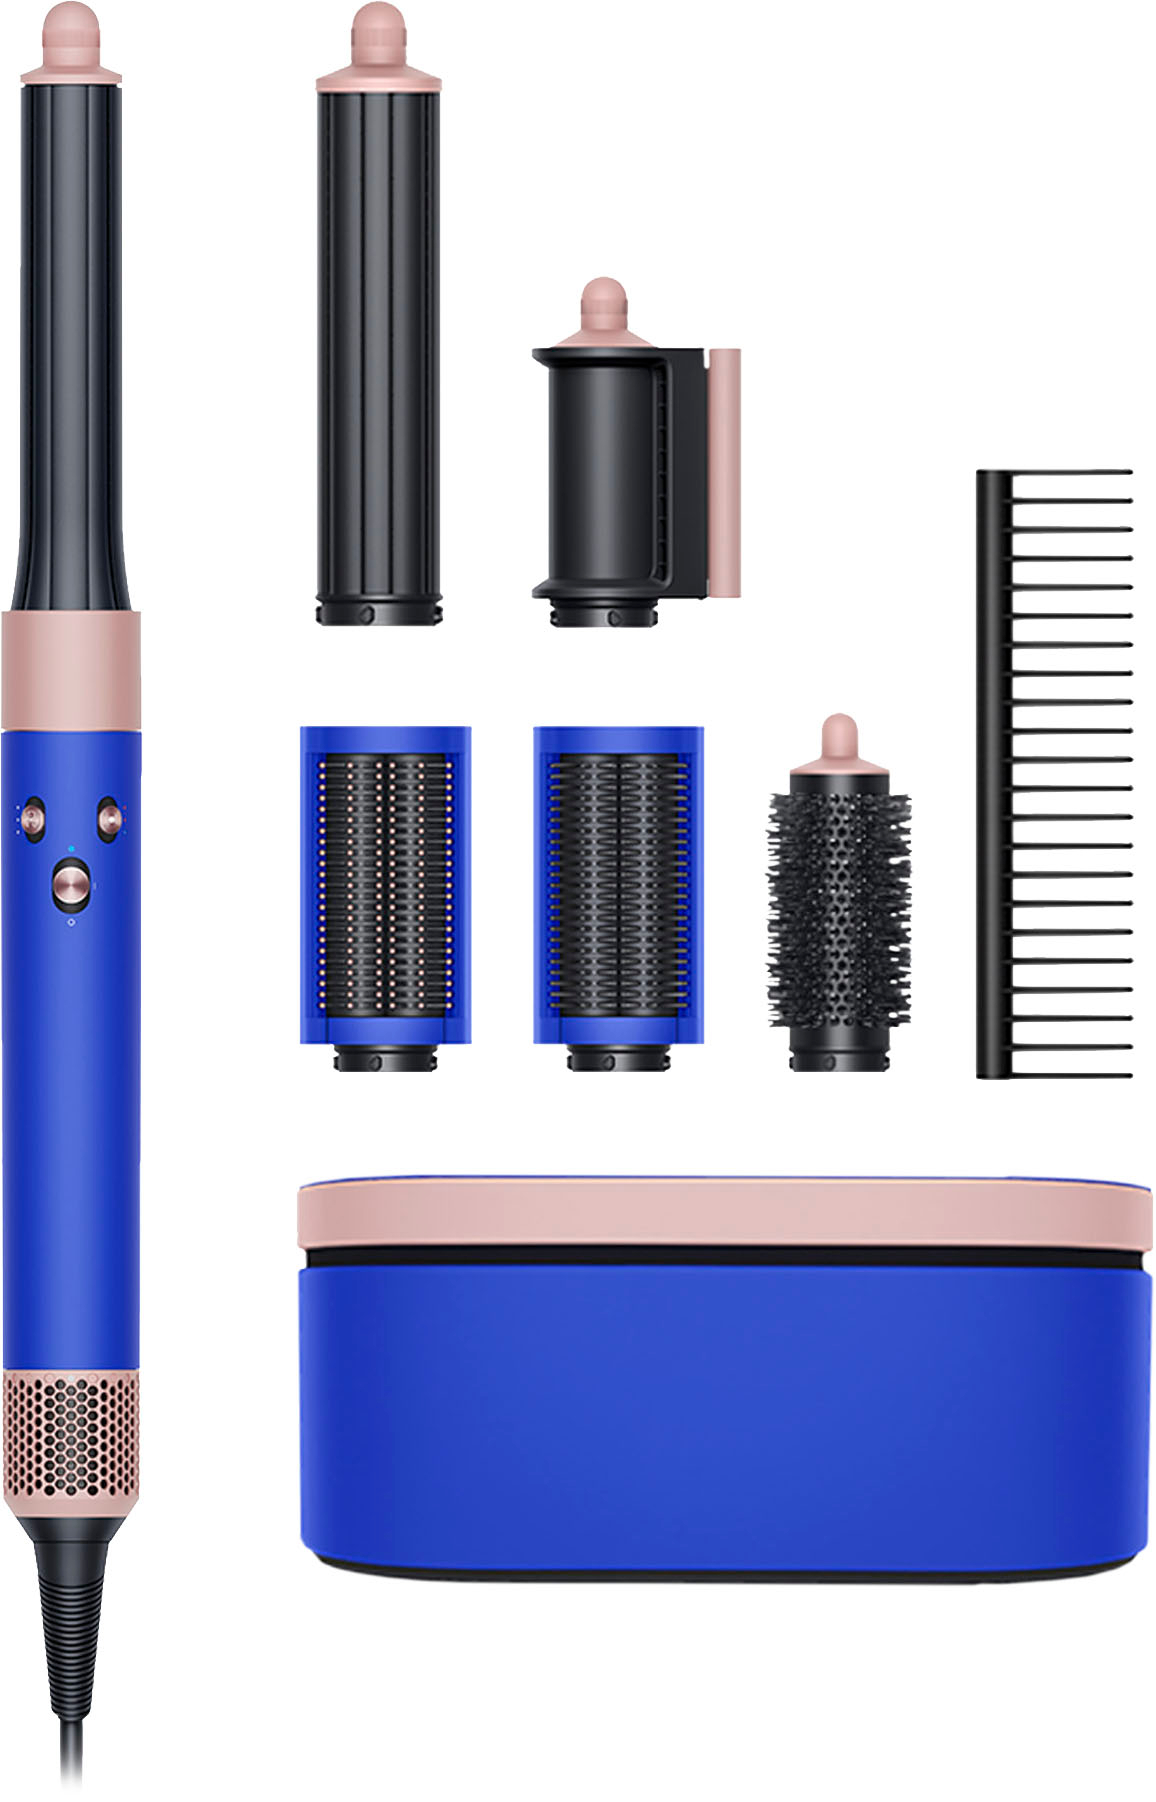 Dyson Airwrap multi-styler Complete Long Ultra blue/Blush pink